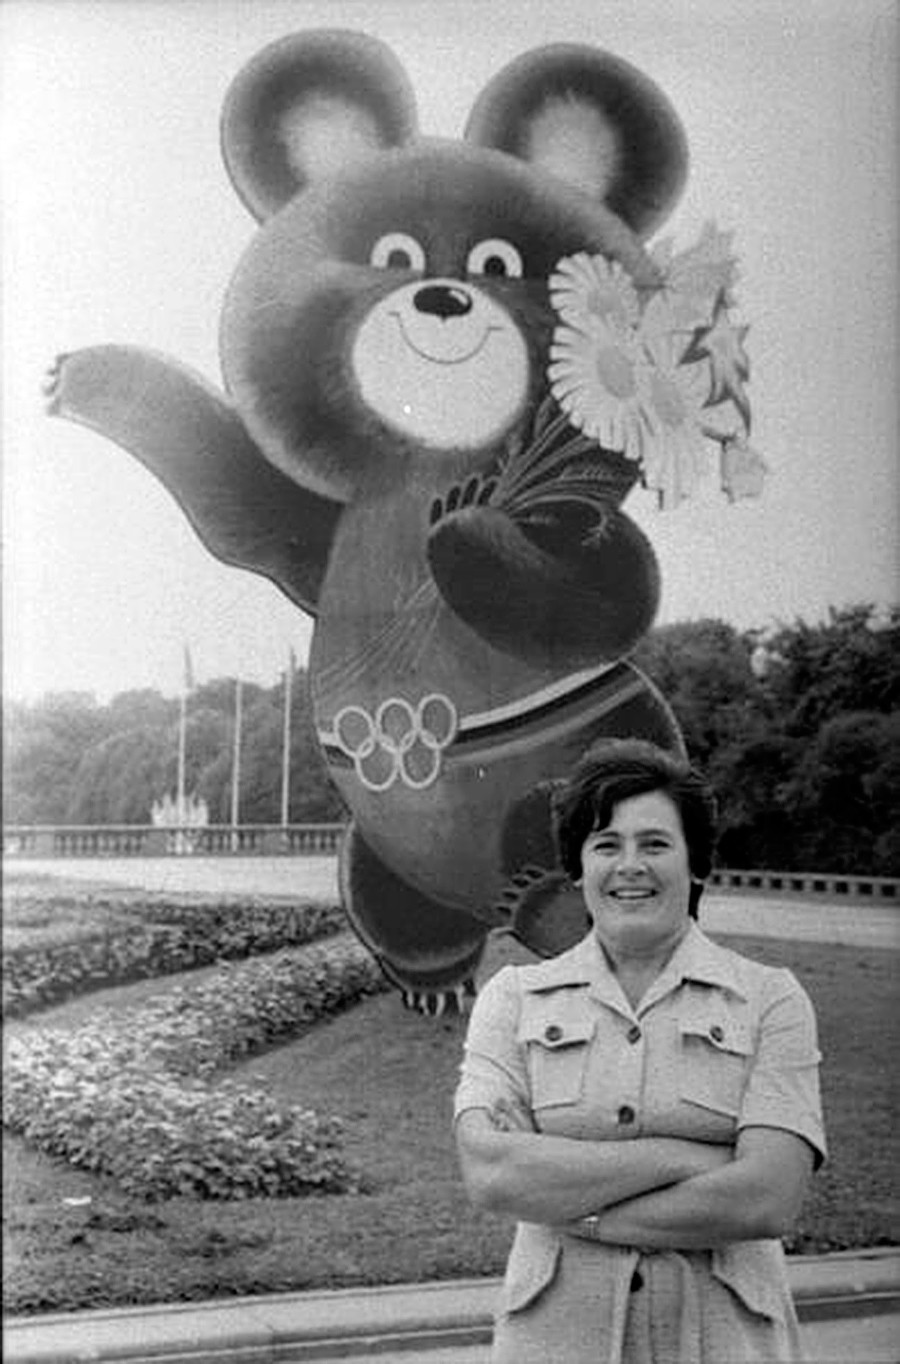 Potret seorang perempuan di depan Mishka, maskot Olimpiade Moskow 1980.